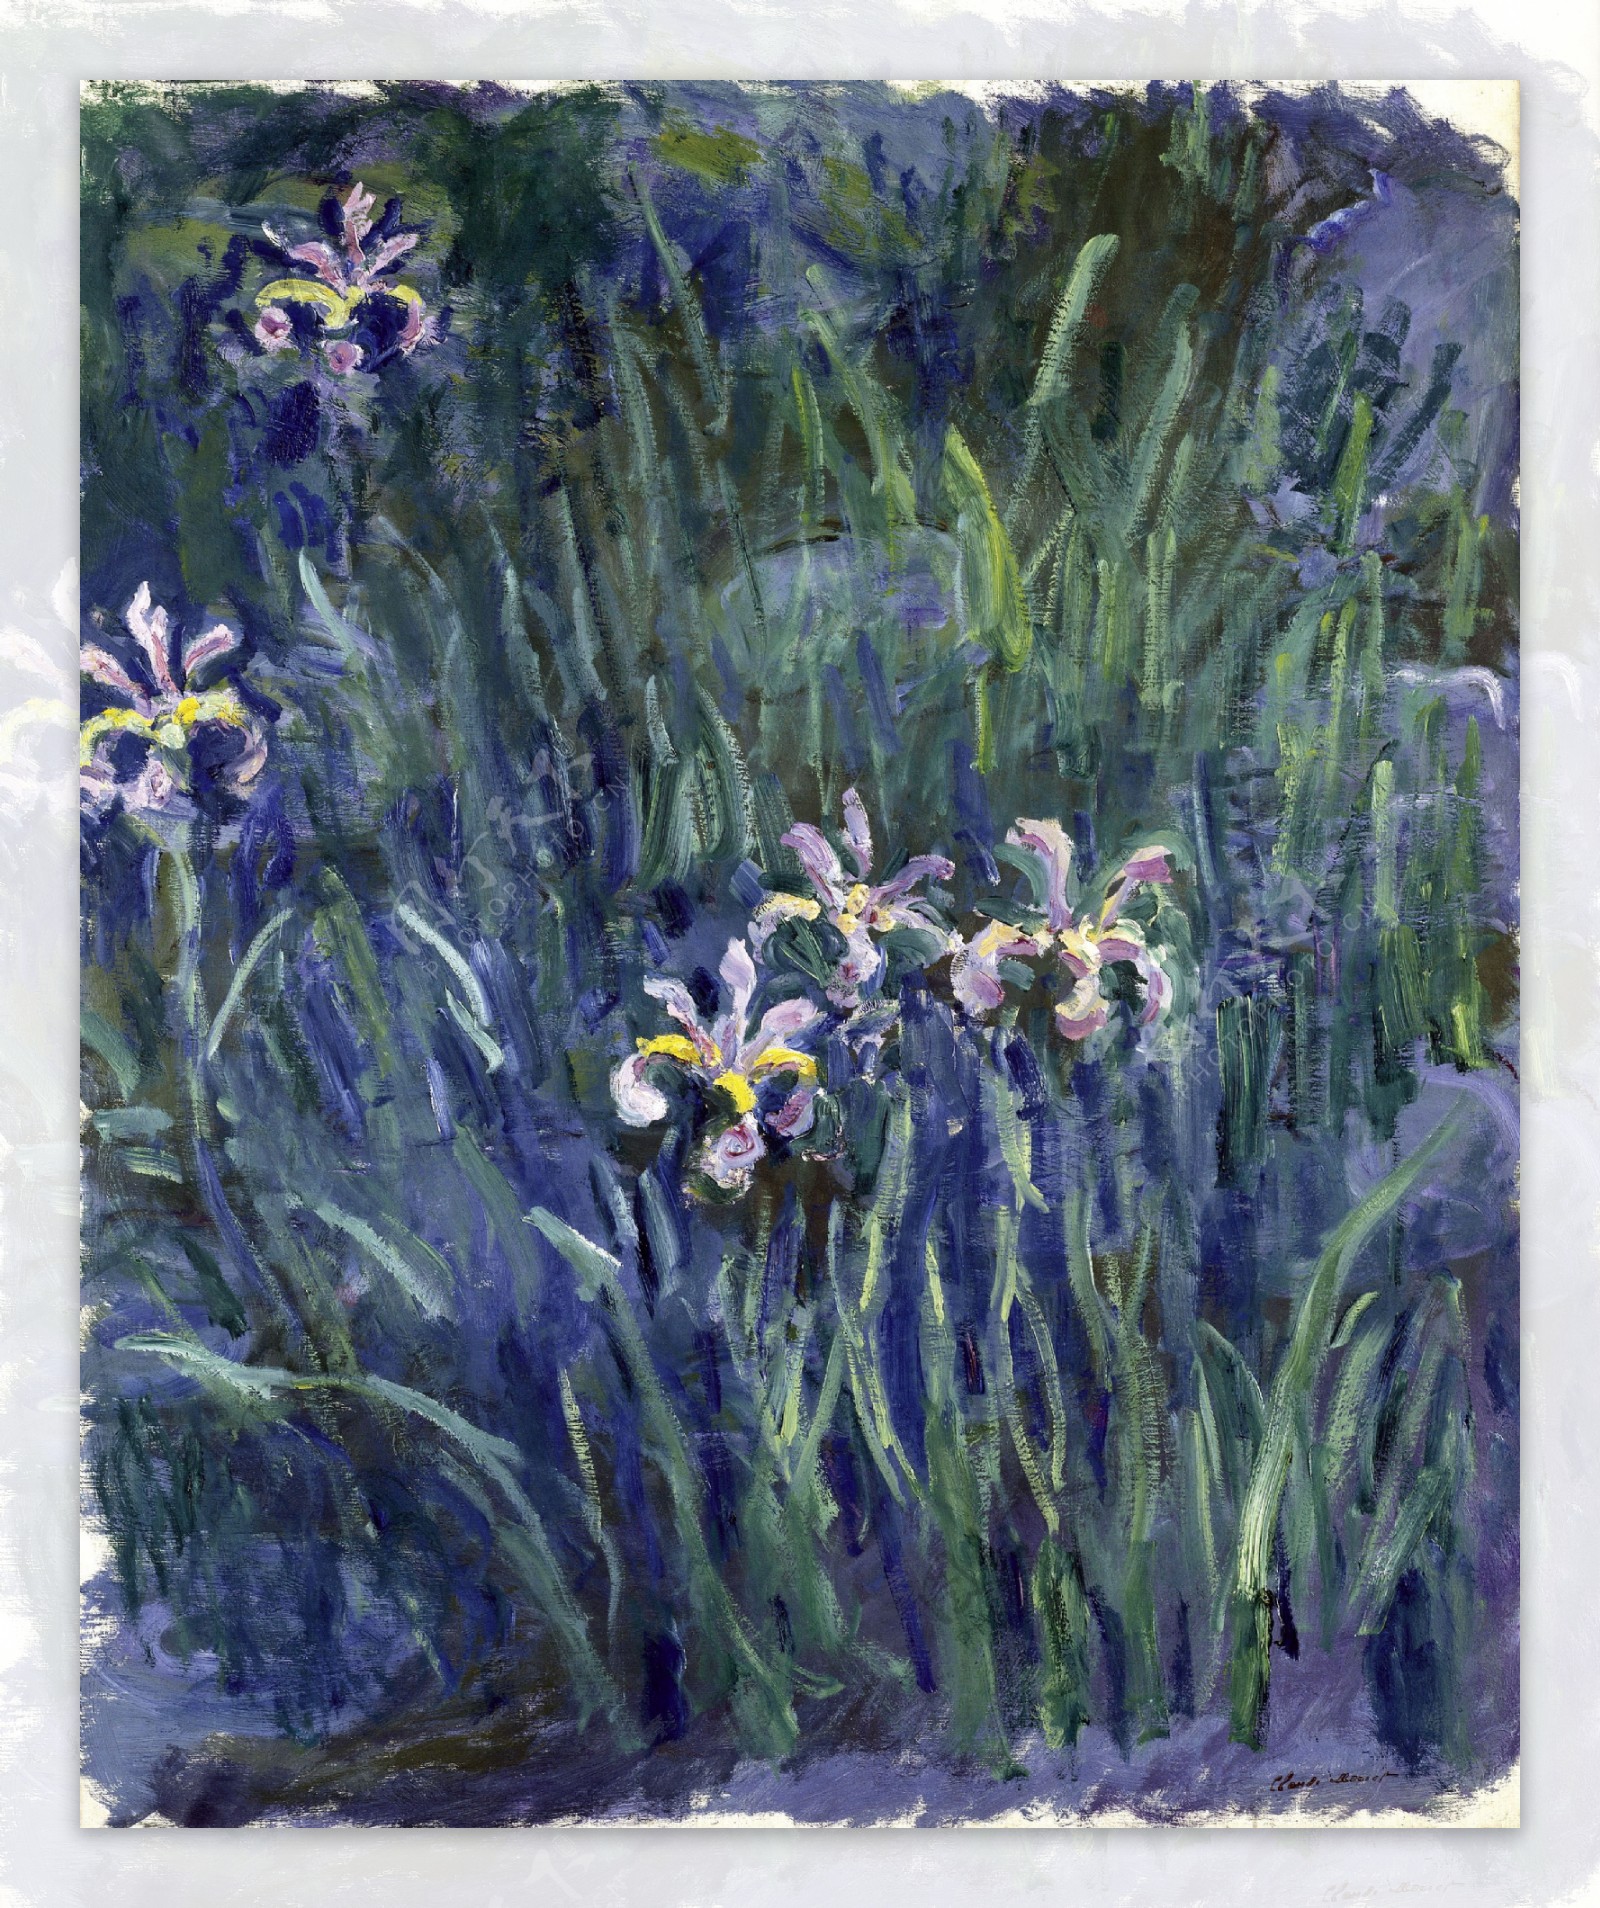 Iris19141917法国画家克劳德.莫奈oscarclaudeMonet风景油画装饰画